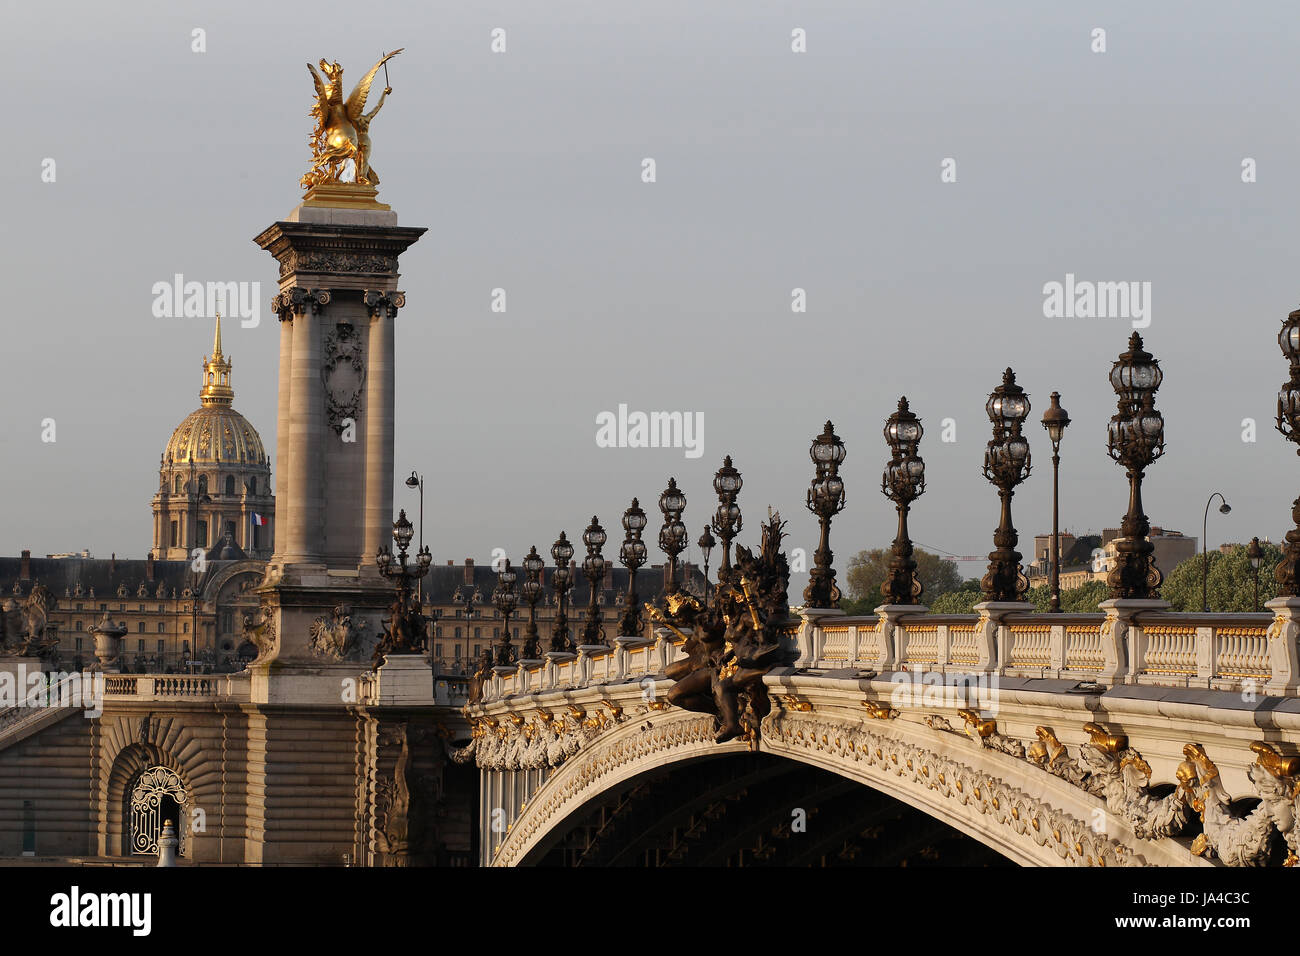 The Pont Alexandre III is a deck arch bridge that spans the Seine in Paris, France. Stock Photo